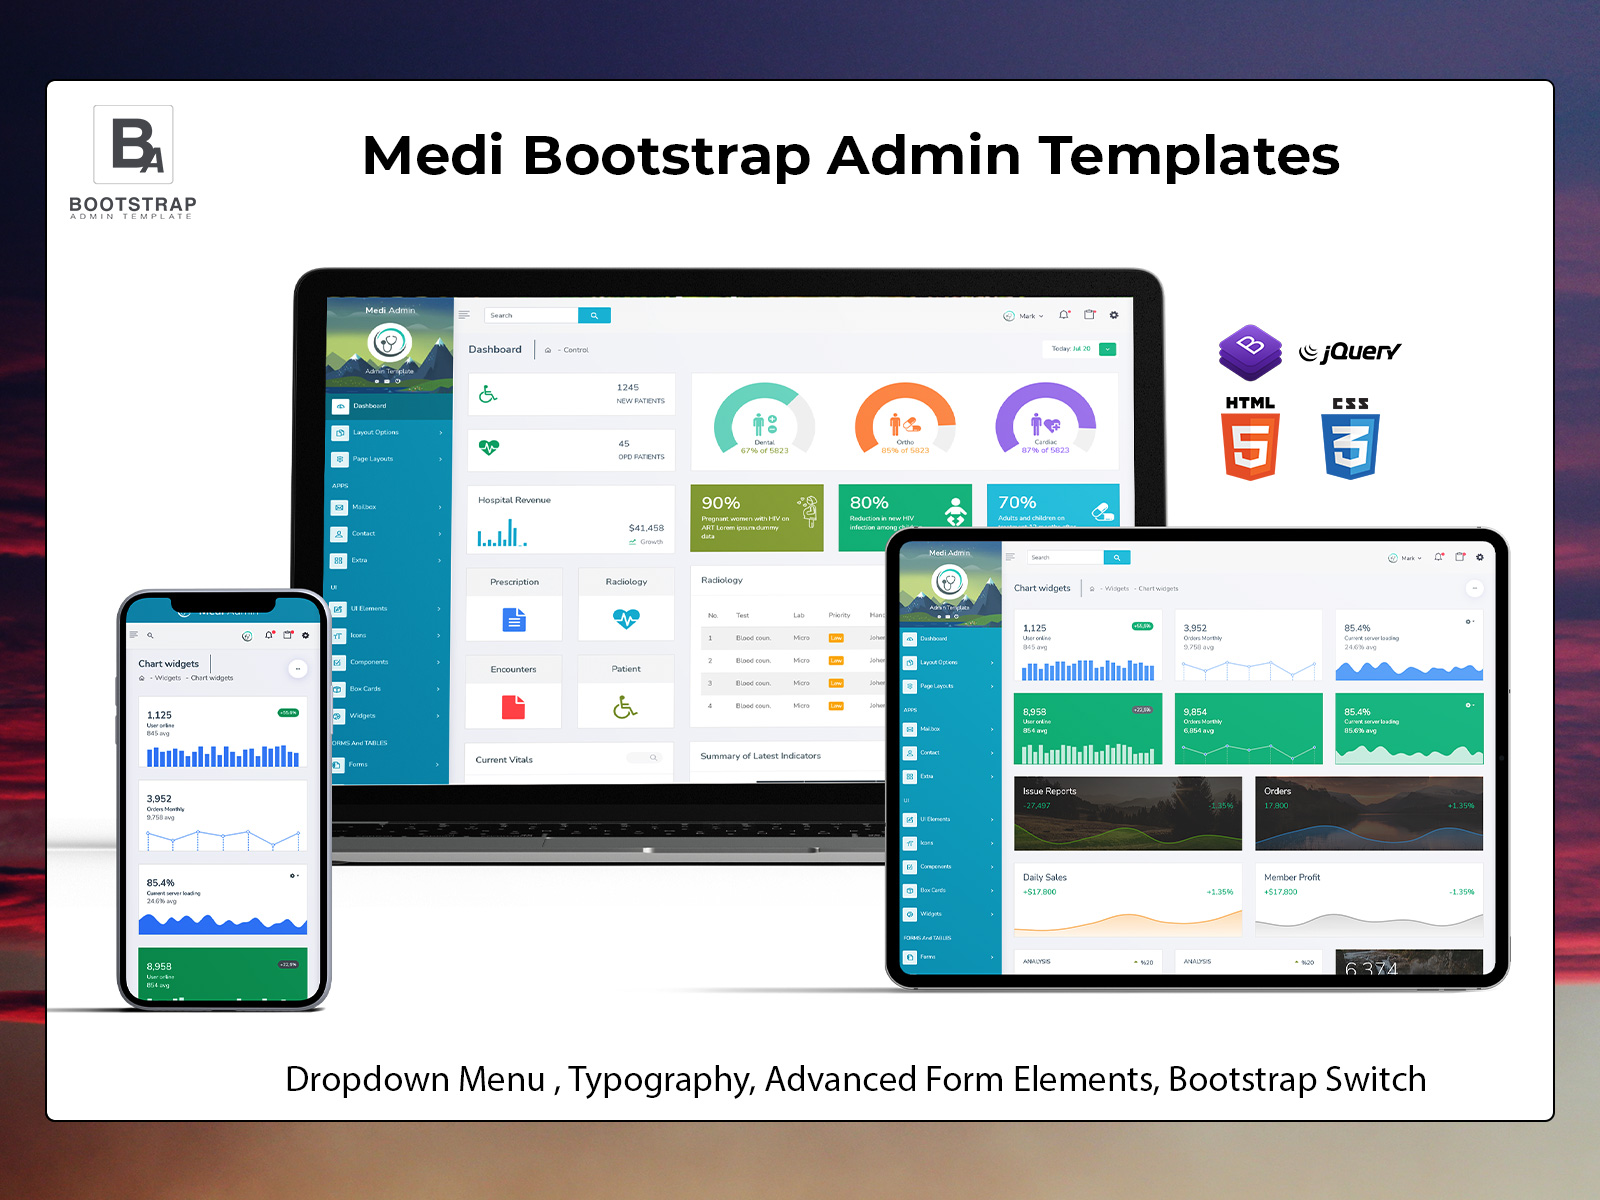 Check Medi Premium Bootstrap Admin Templates UI Framework